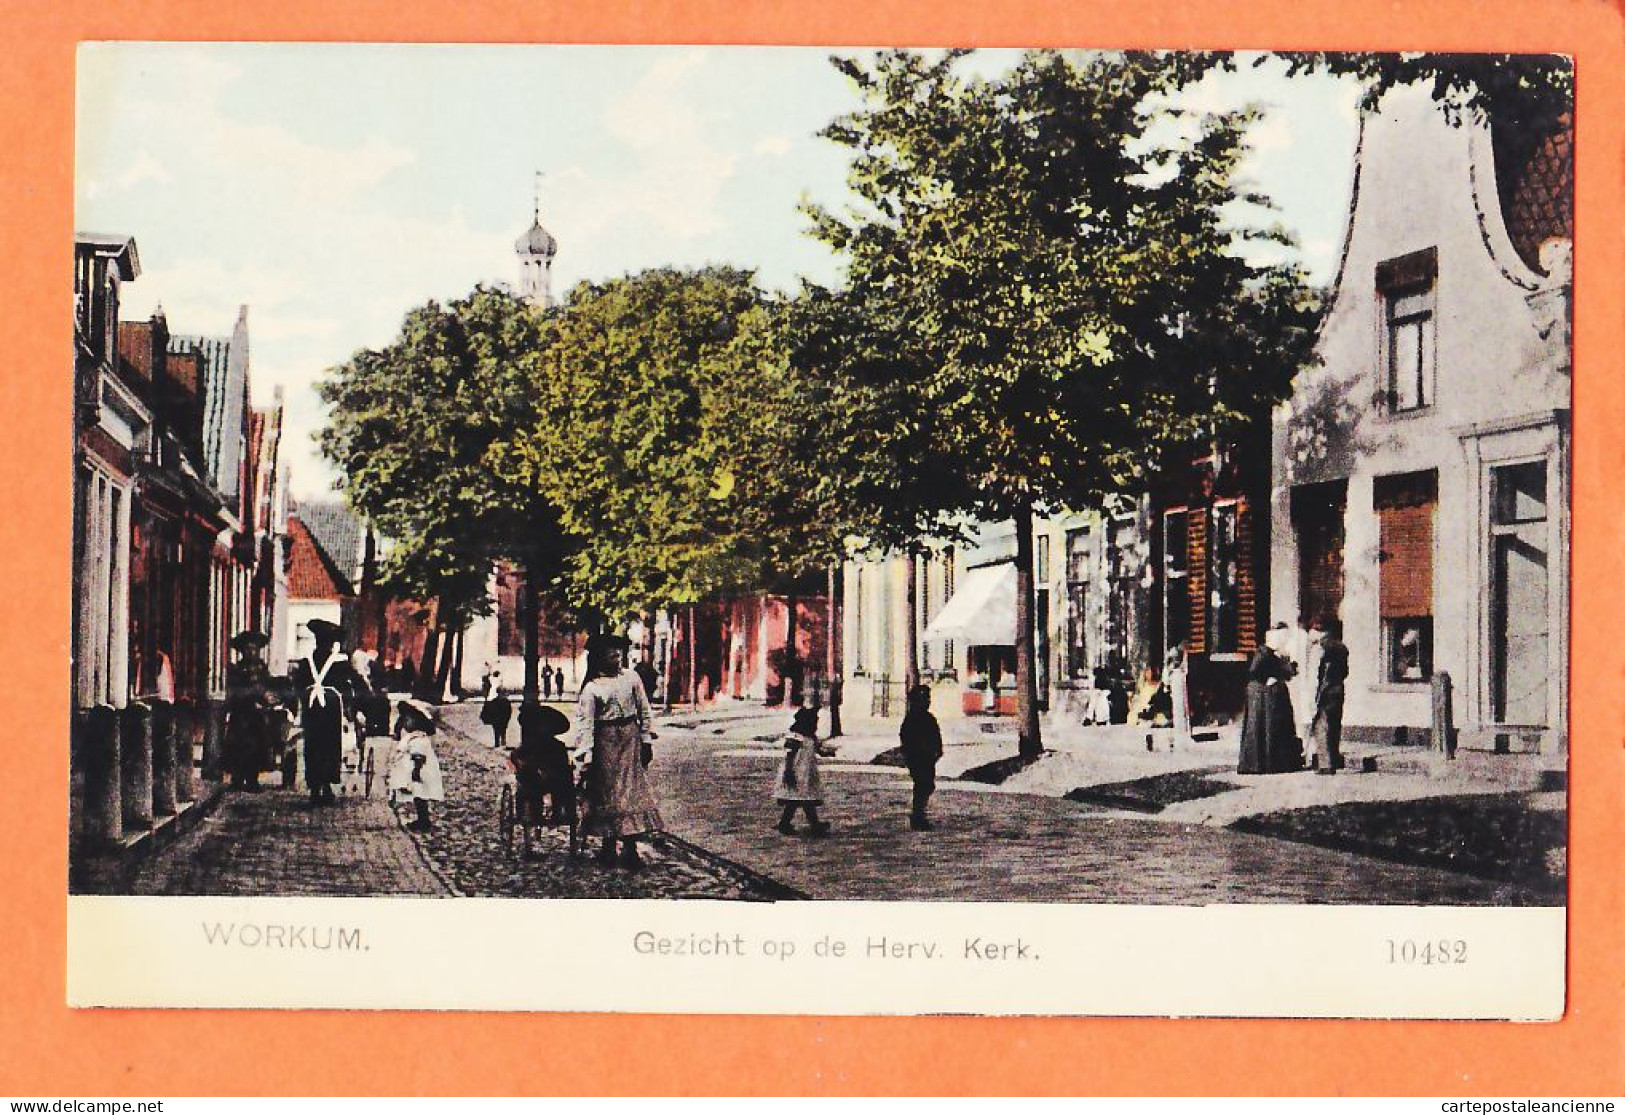 05075 ● WORKUM Friesland Gezicht Op De Herv. Kerk Dorpeling Straatbeeld 1910s NAUTA 10482 Velsen Nederland Niederlande - Workum